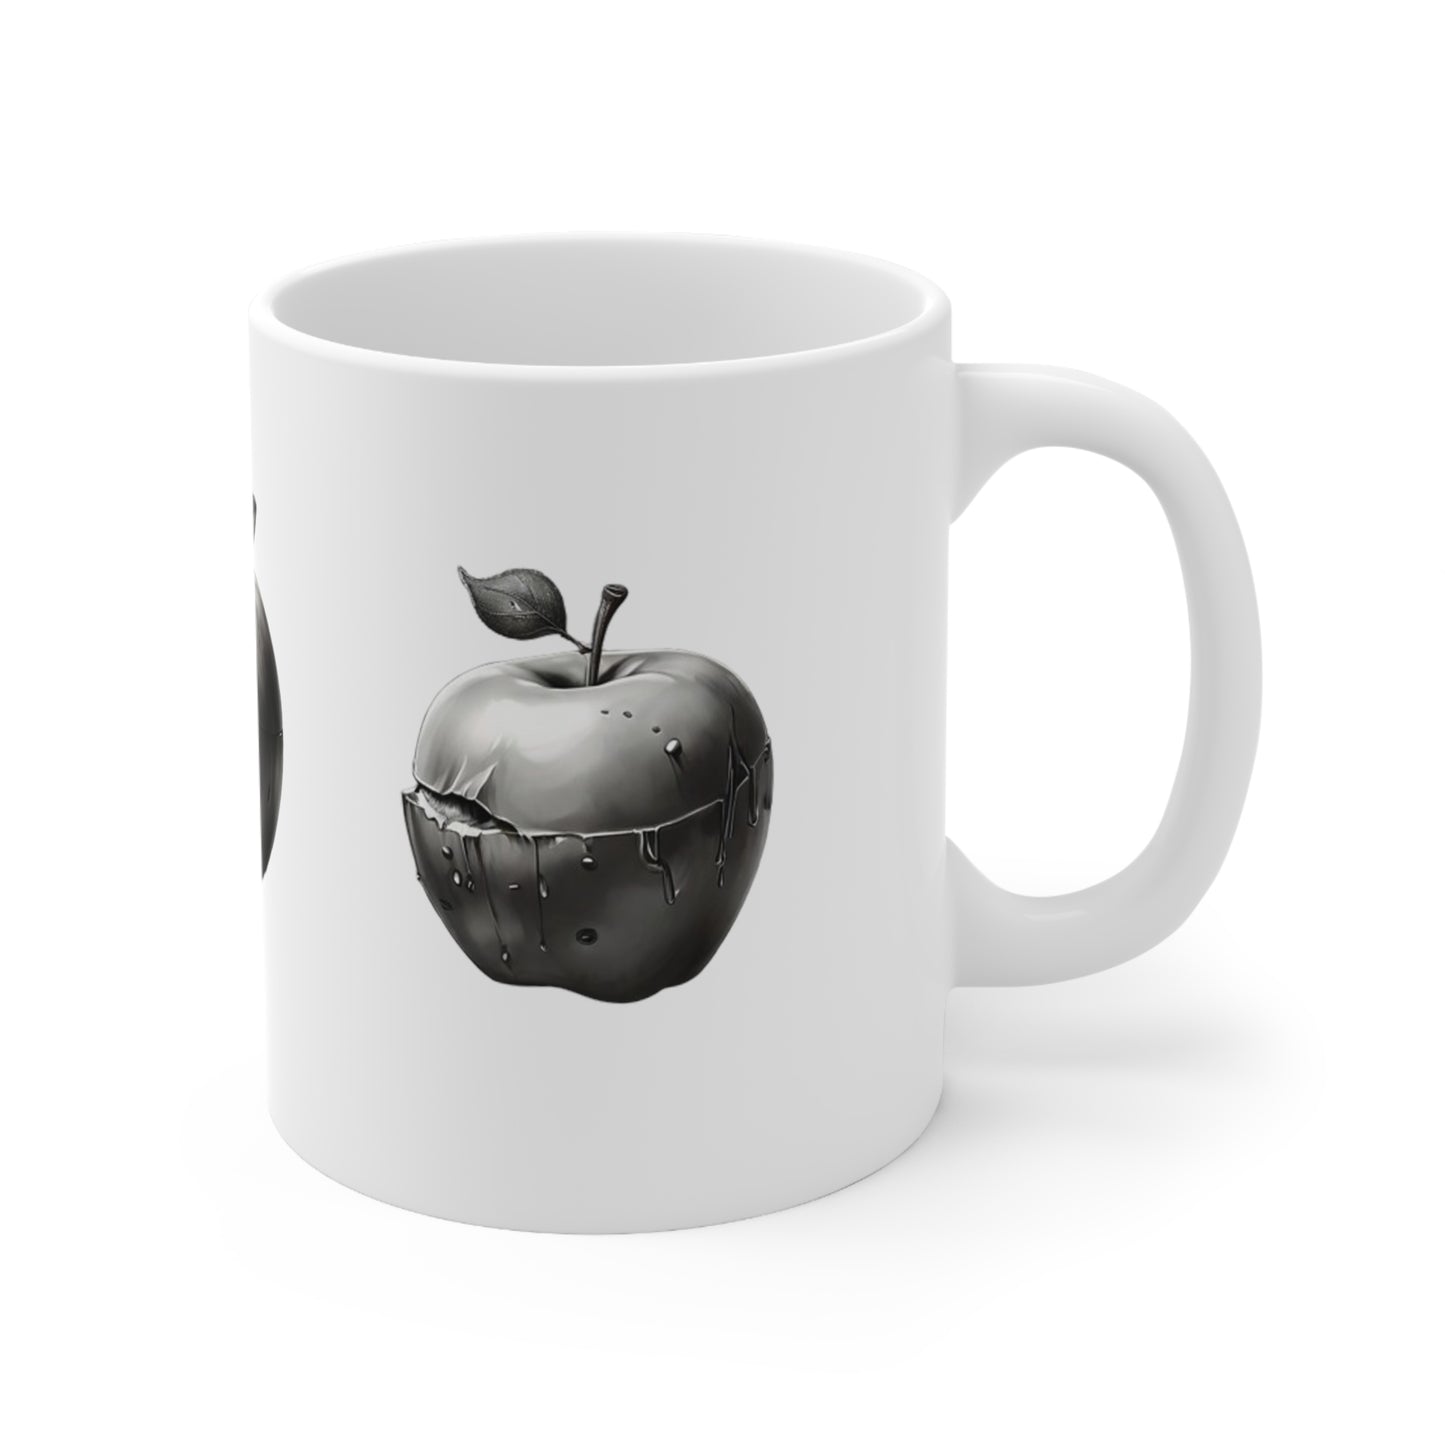 Black and White Cracked Apples Mug - Ceramic Coffee Mug 11oz